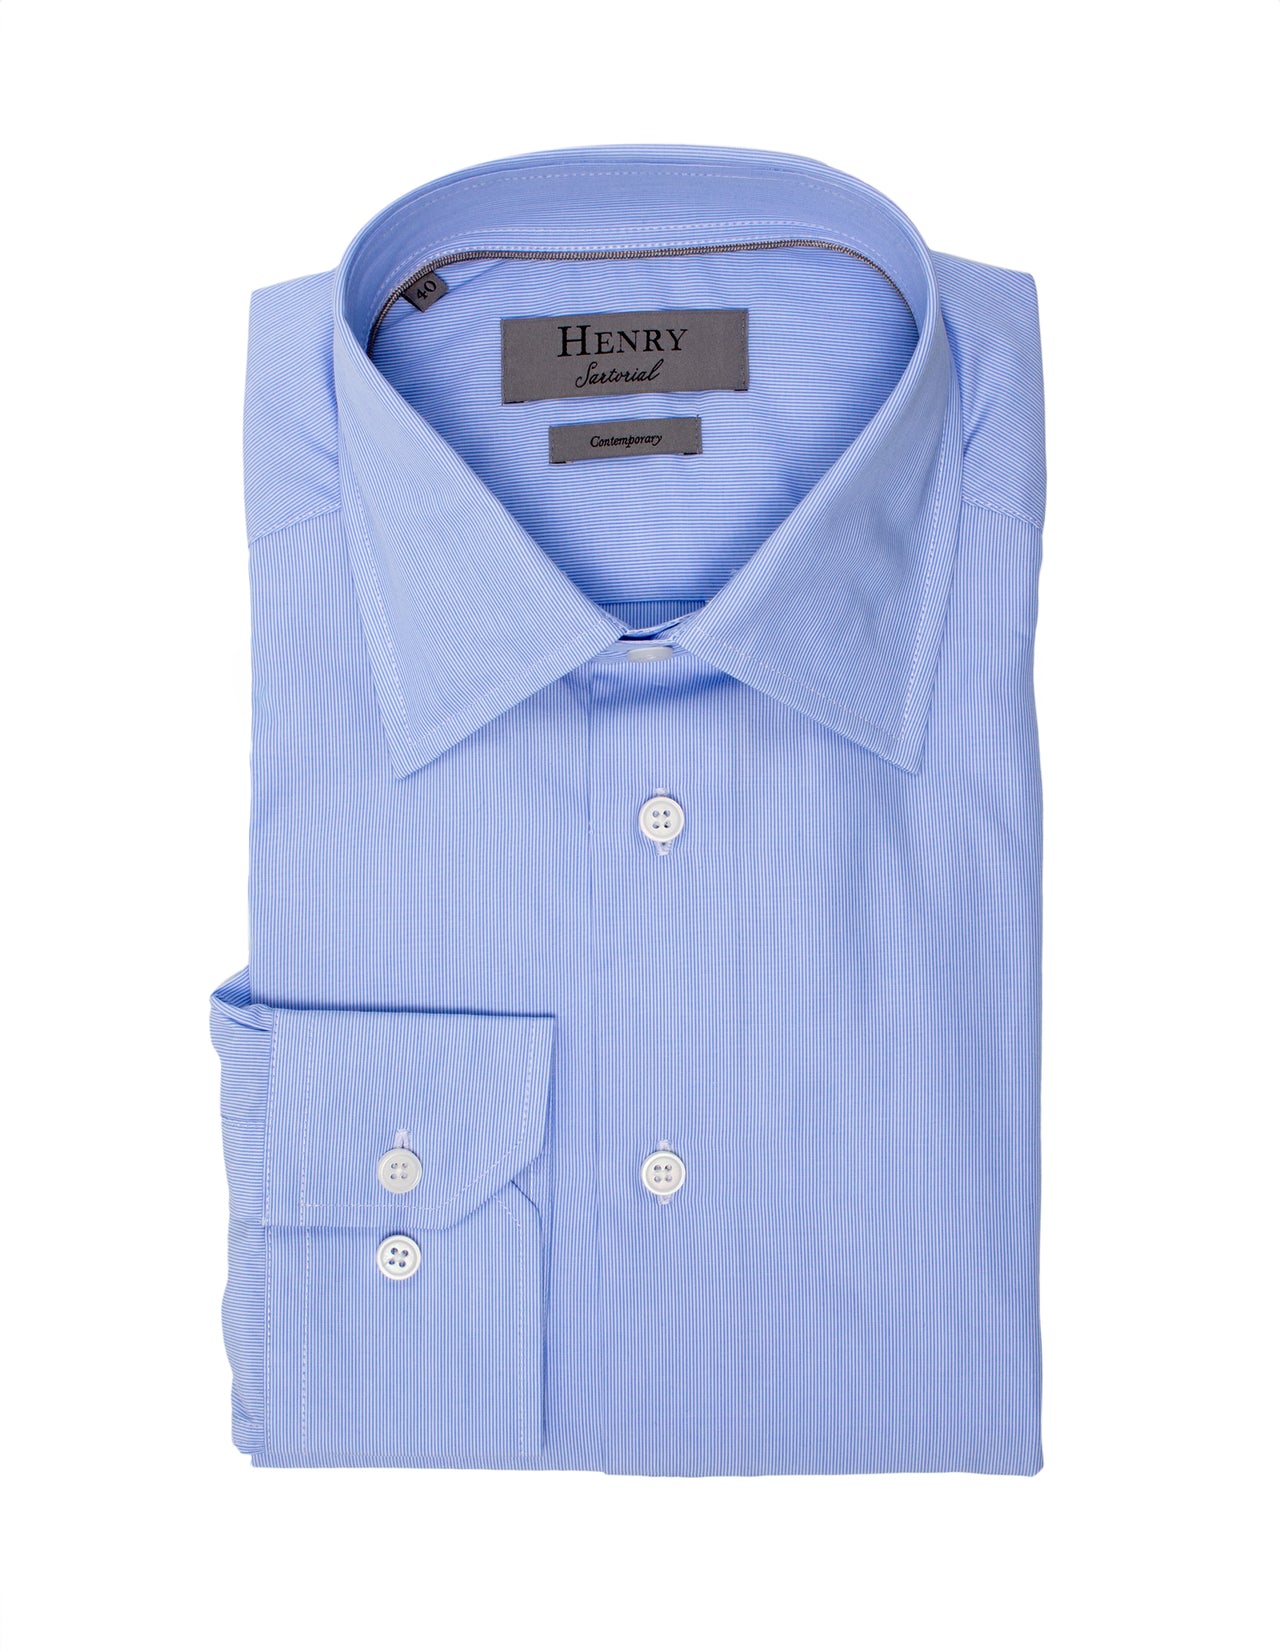 HENRY SARTORIAL Classic Fit Fine Stripe Shirt BLUE